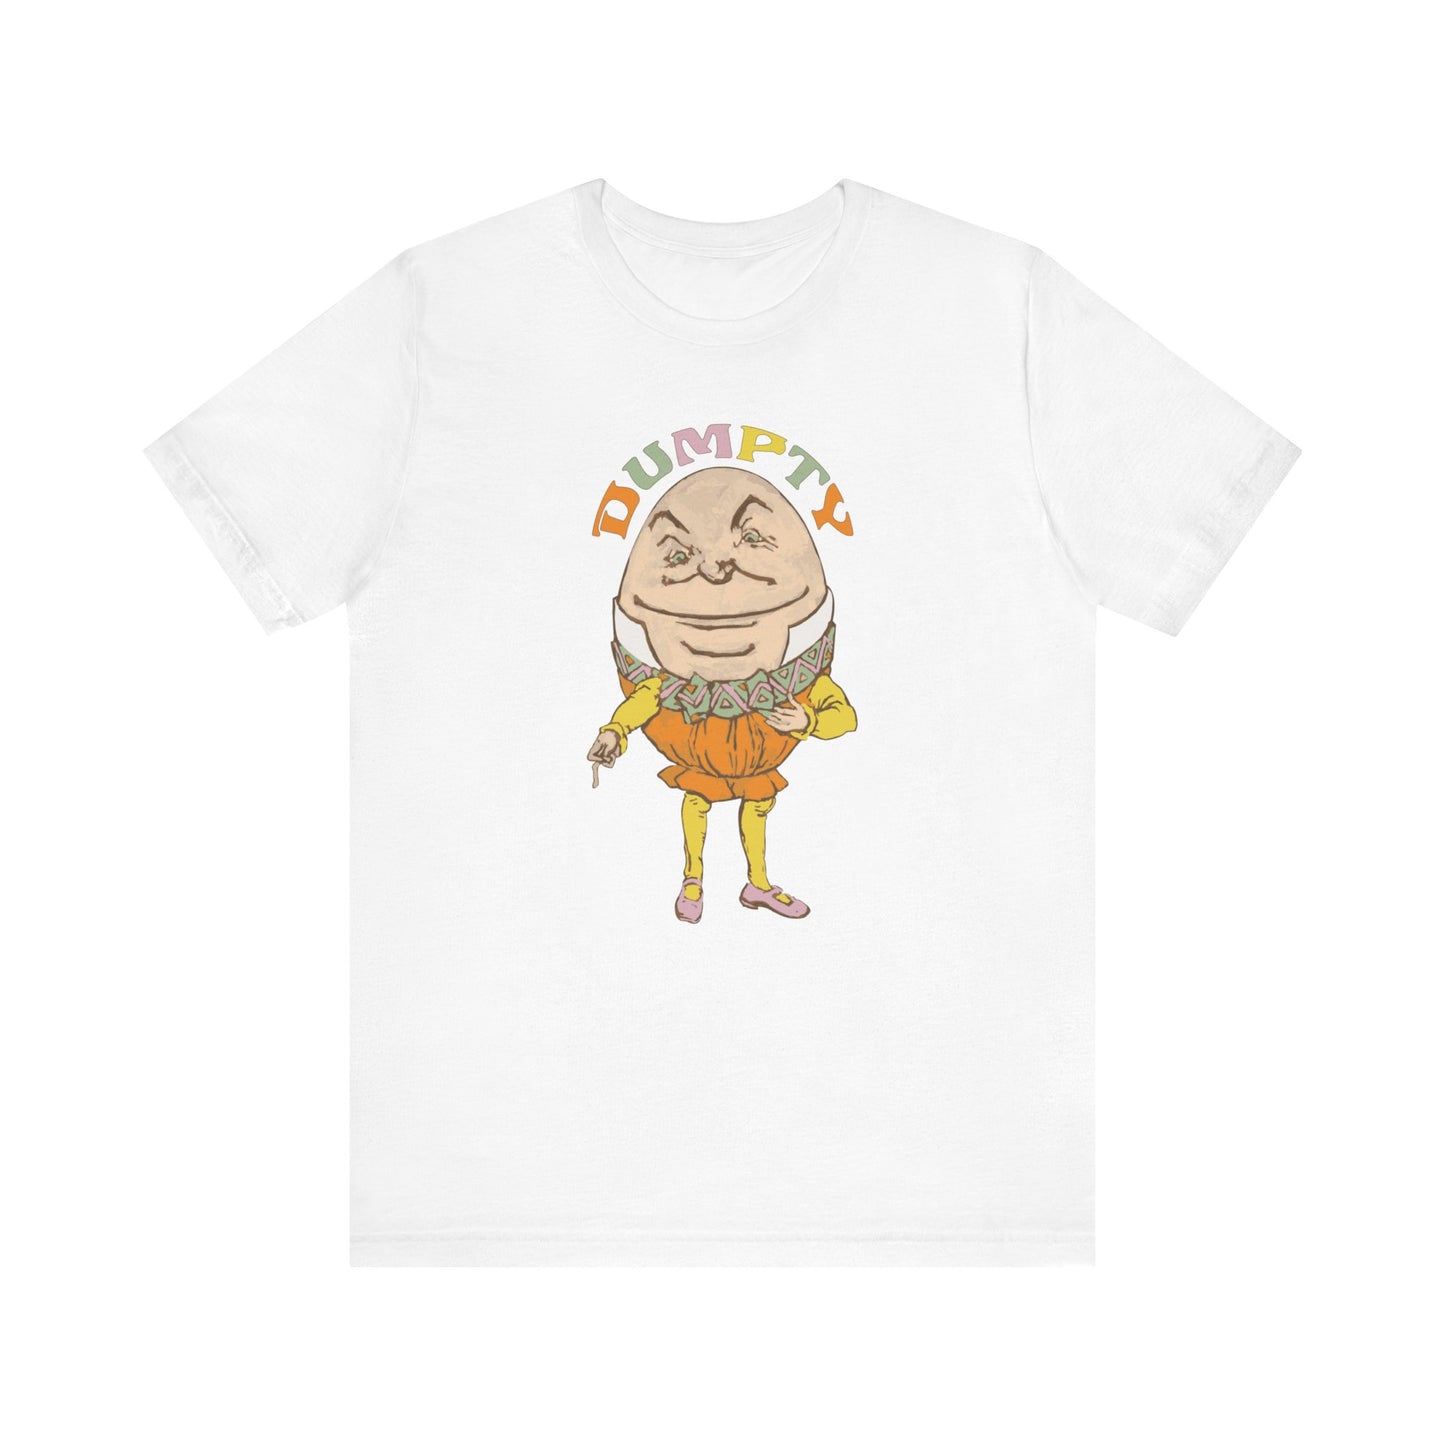 Dumpty - Unisex T-Shirt